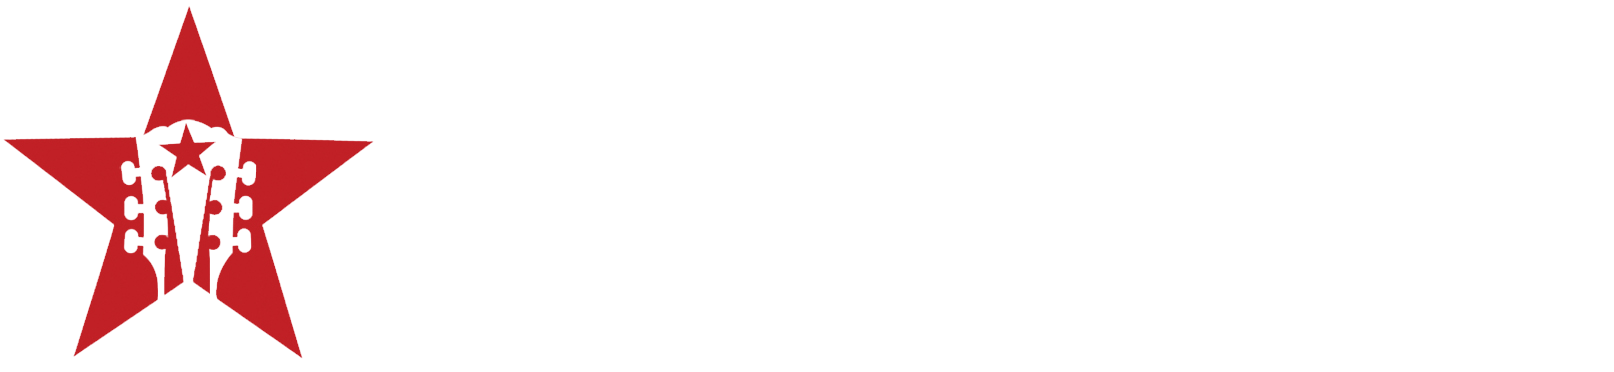 Renfro-Valley-Entertainment-Center-White-Logo-Red-Star